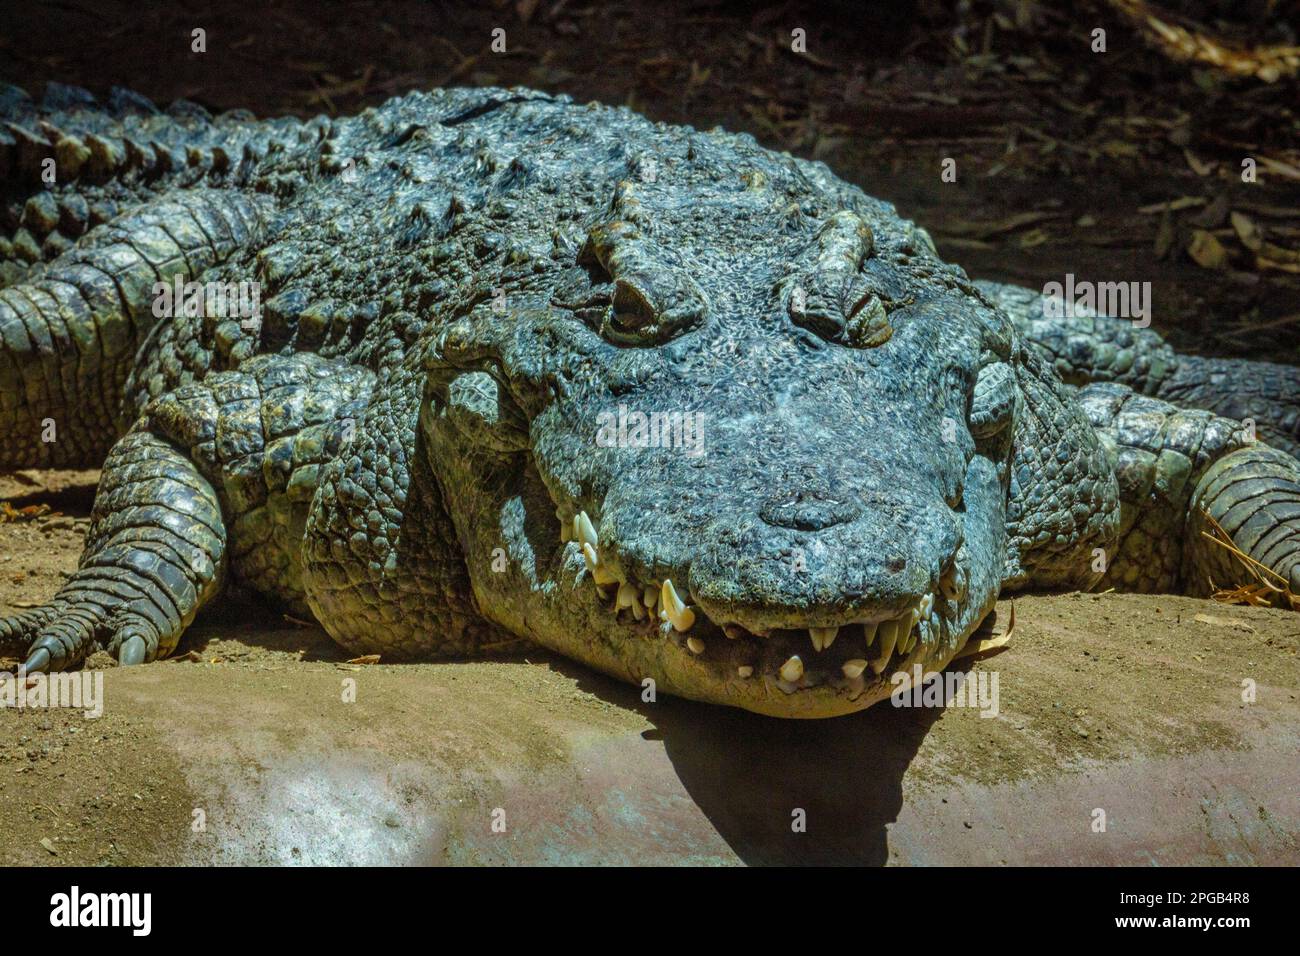 Smiling Alligator Stock Photo